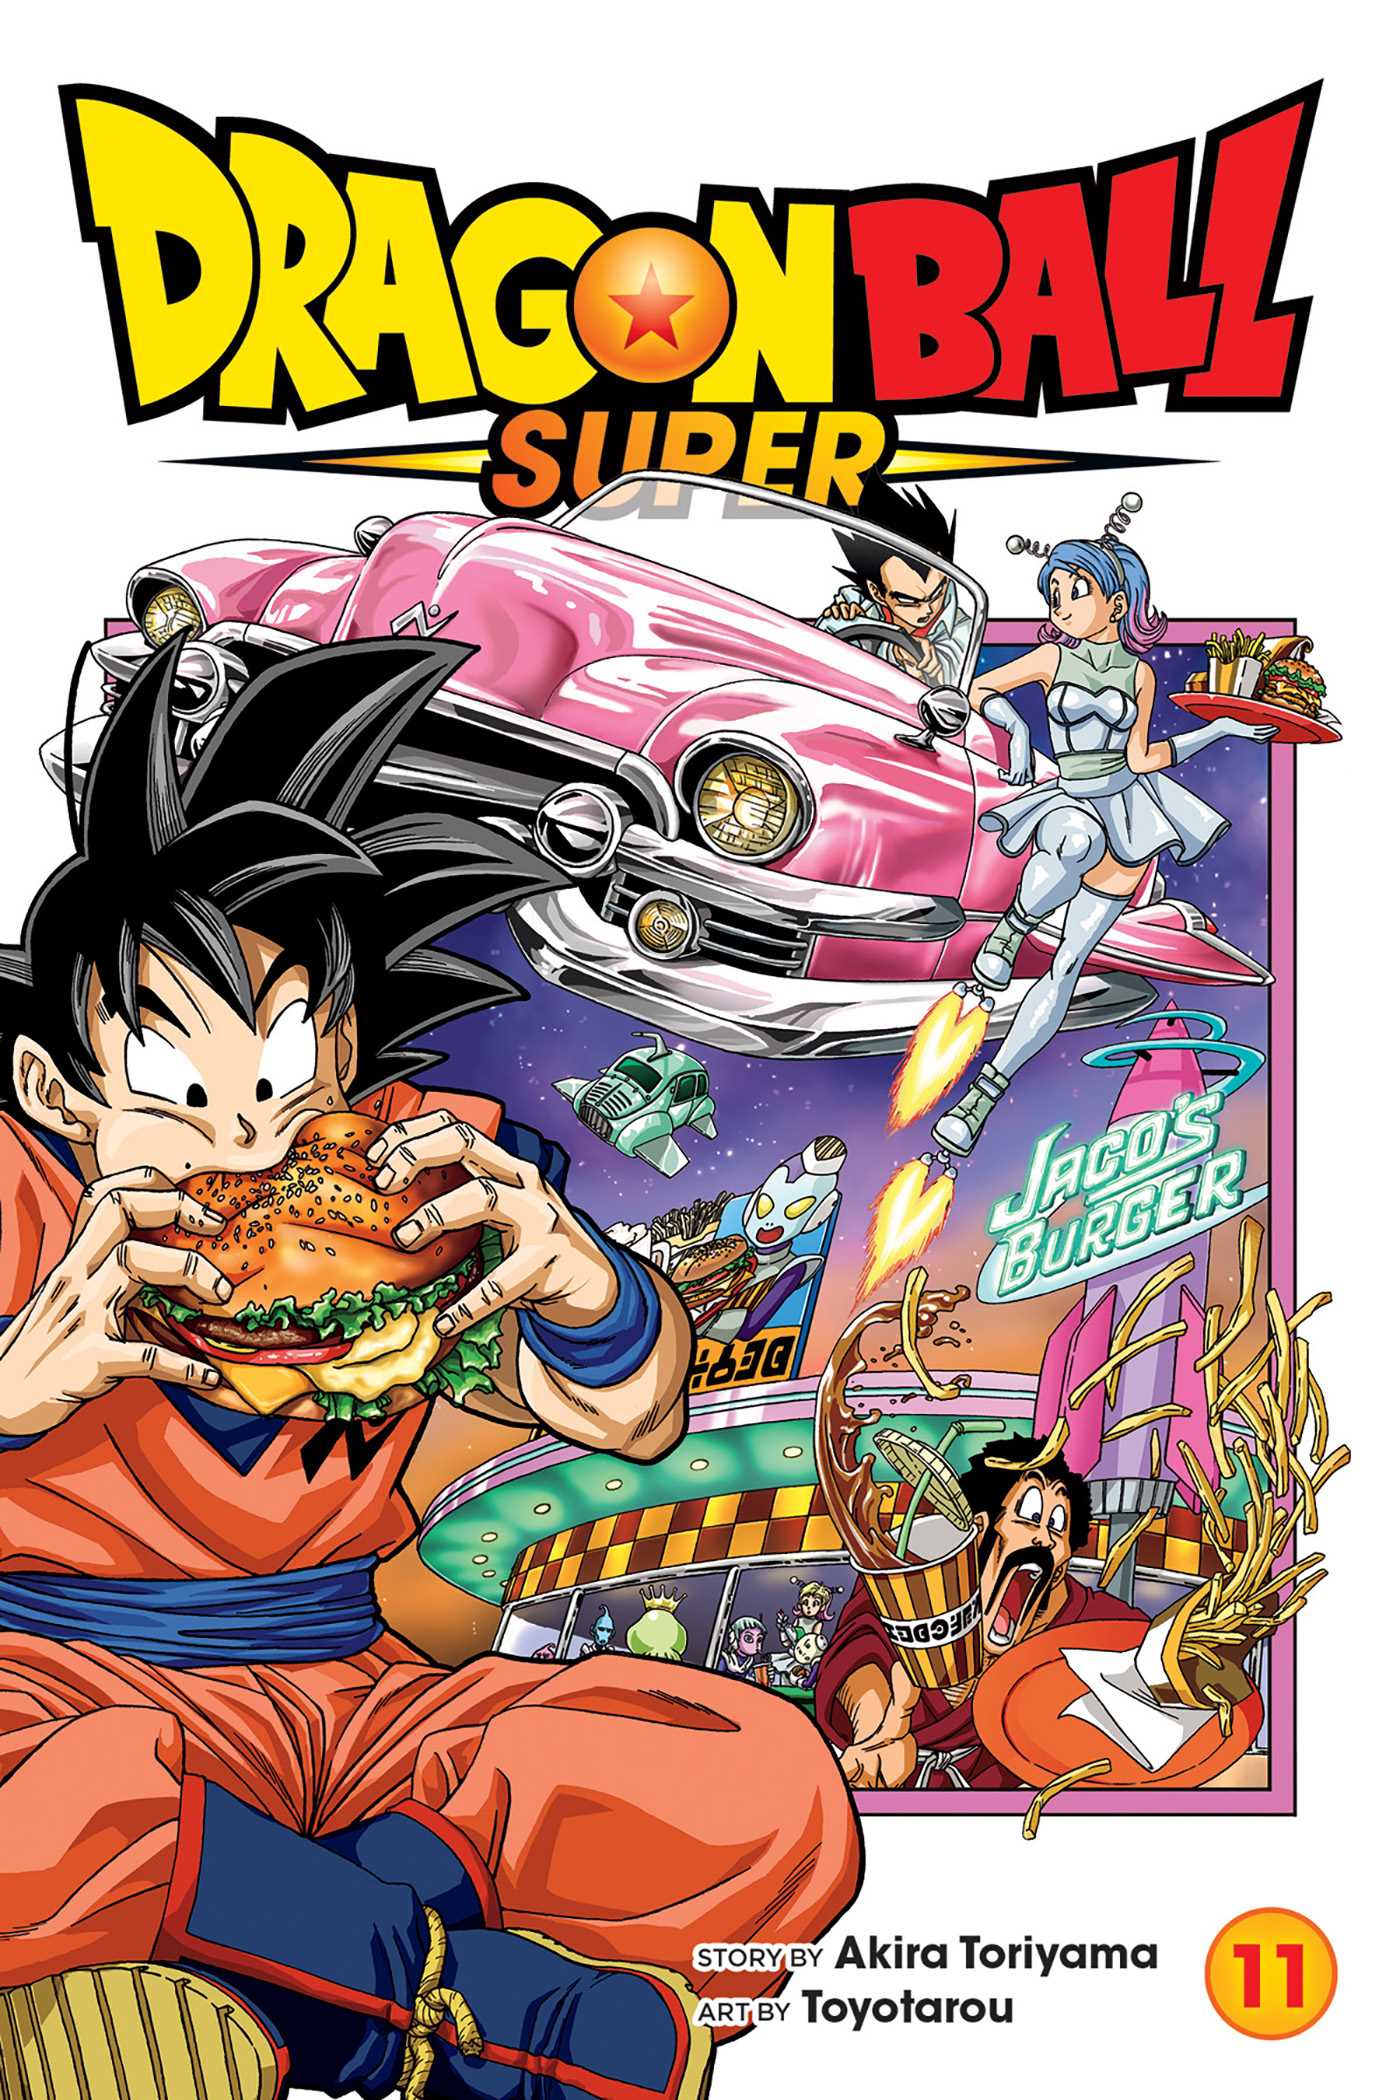 My Favorite Moment In Dragon Ball Super Manga(CCC), Wiki